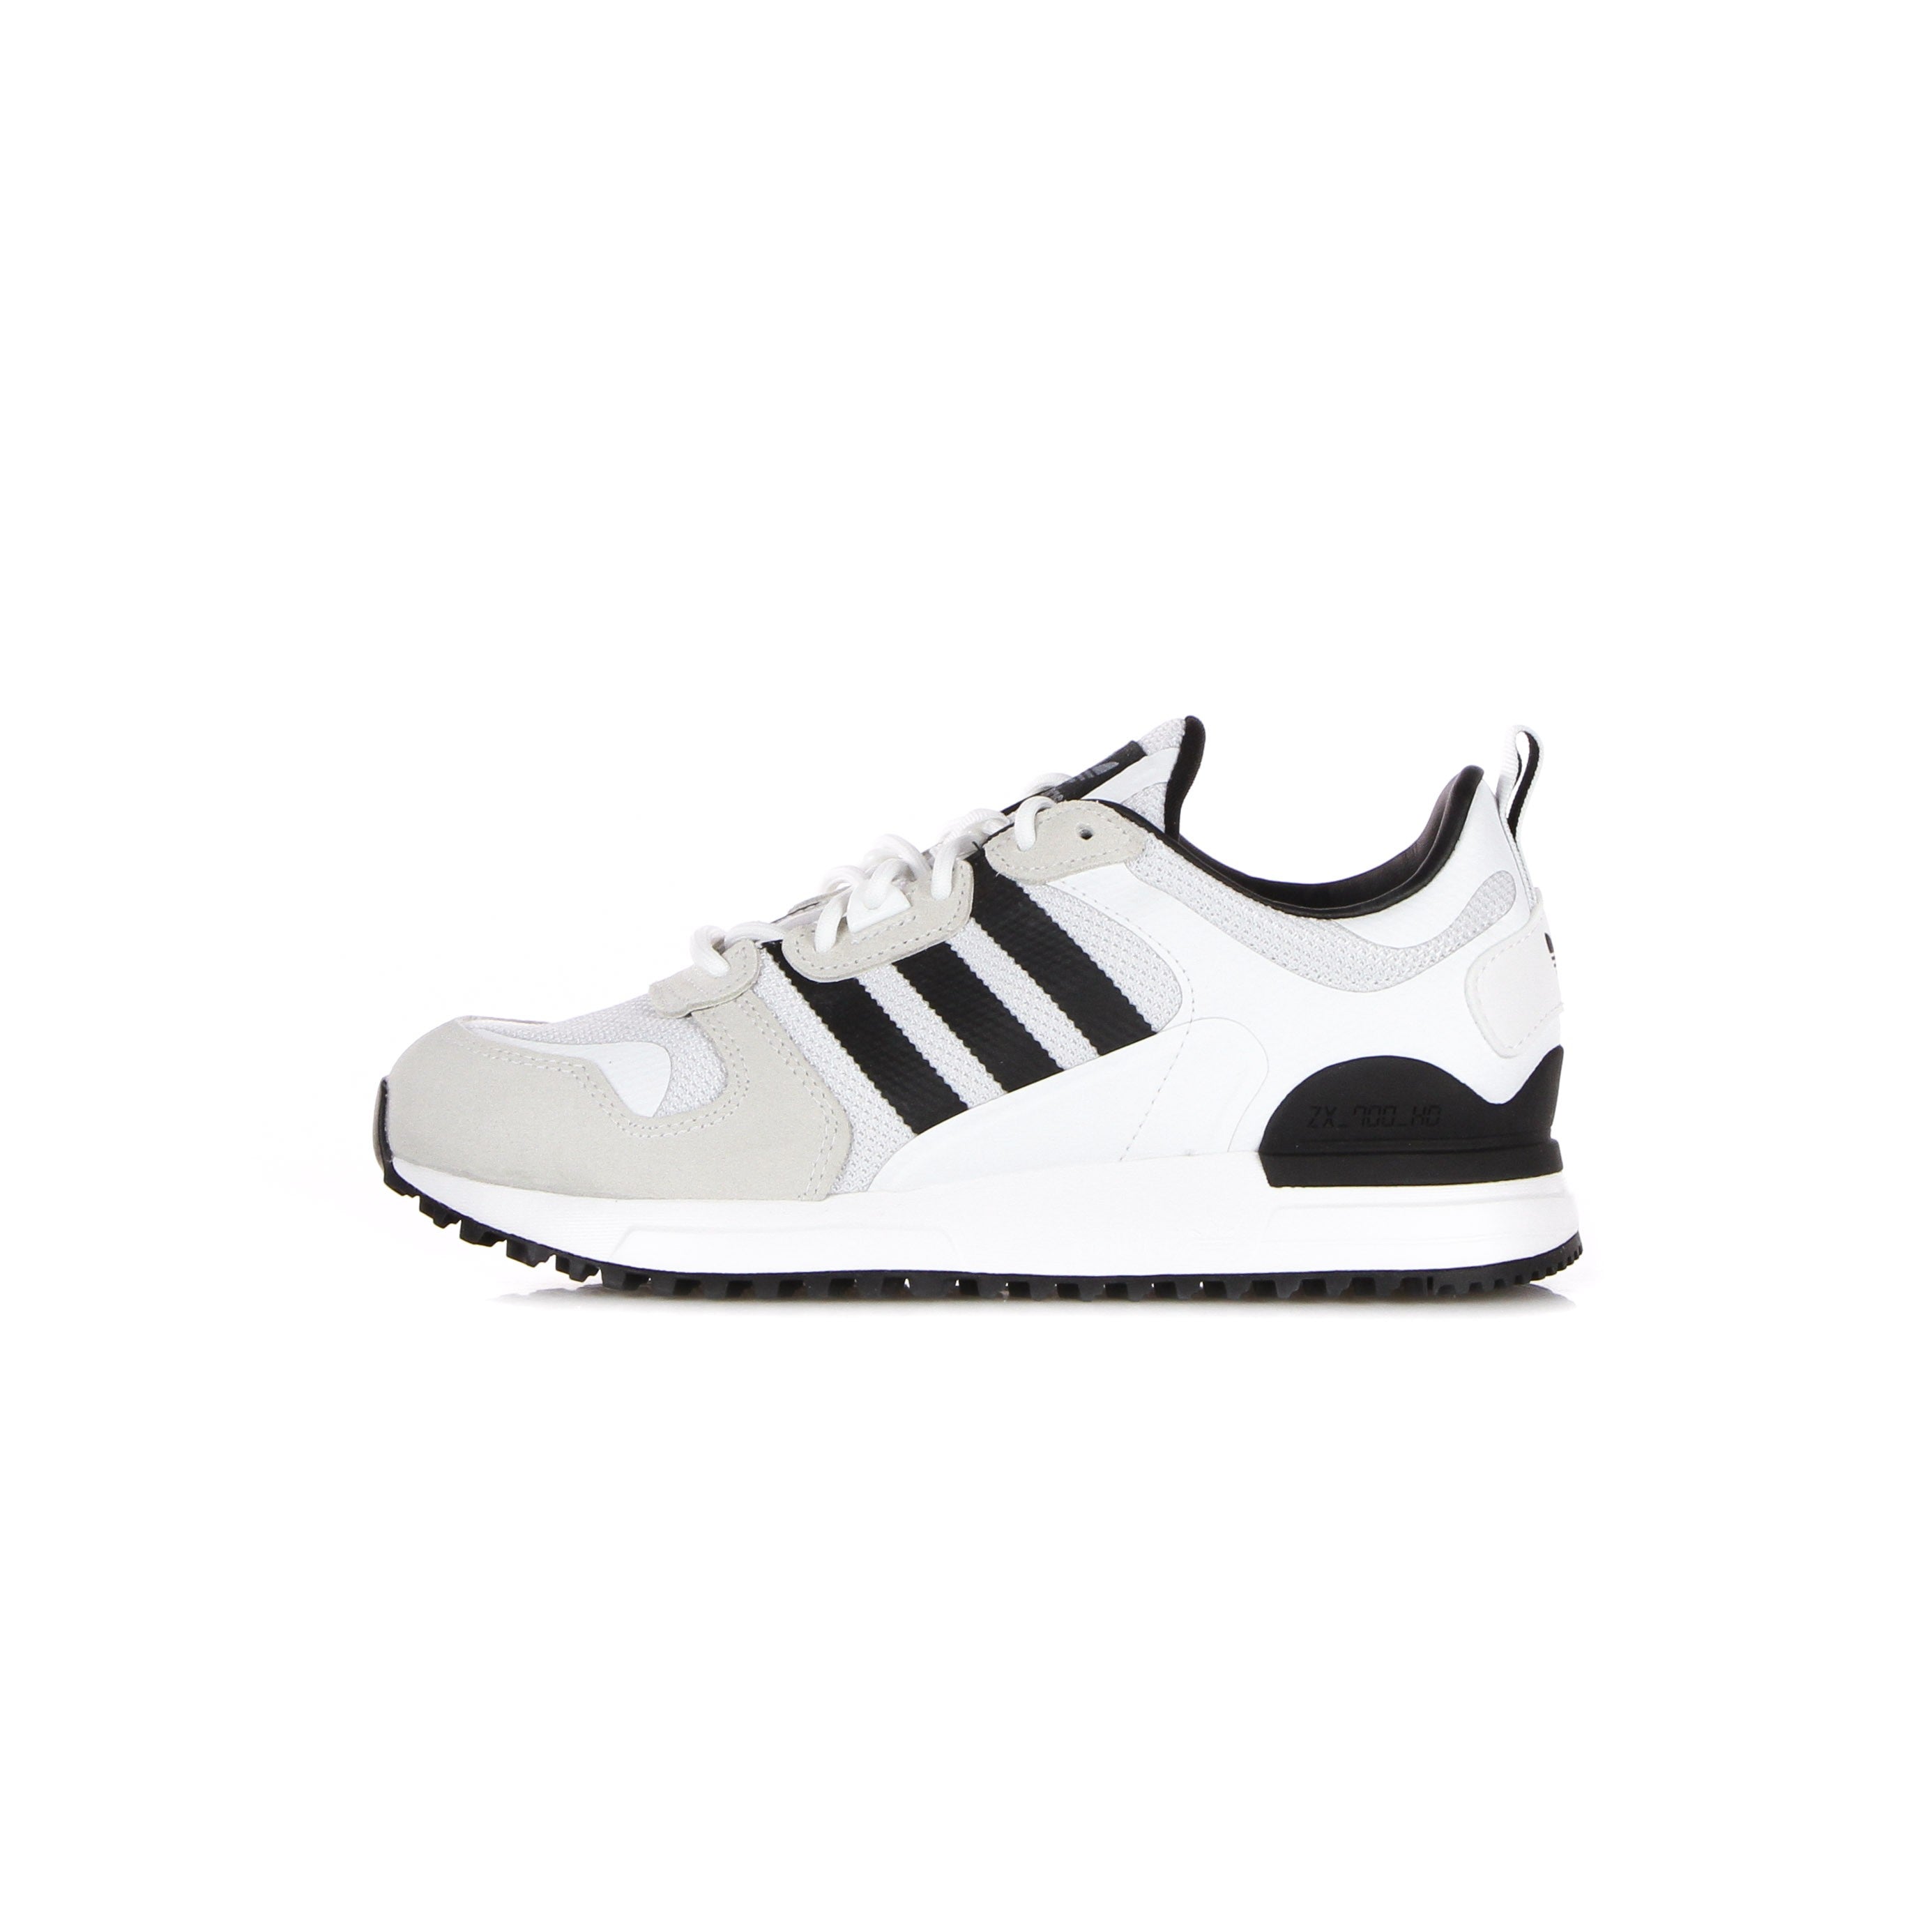 Adidas, Scarpa Bassa Uomo Zx 700 Hd, Cloud White/core Black/cloud White